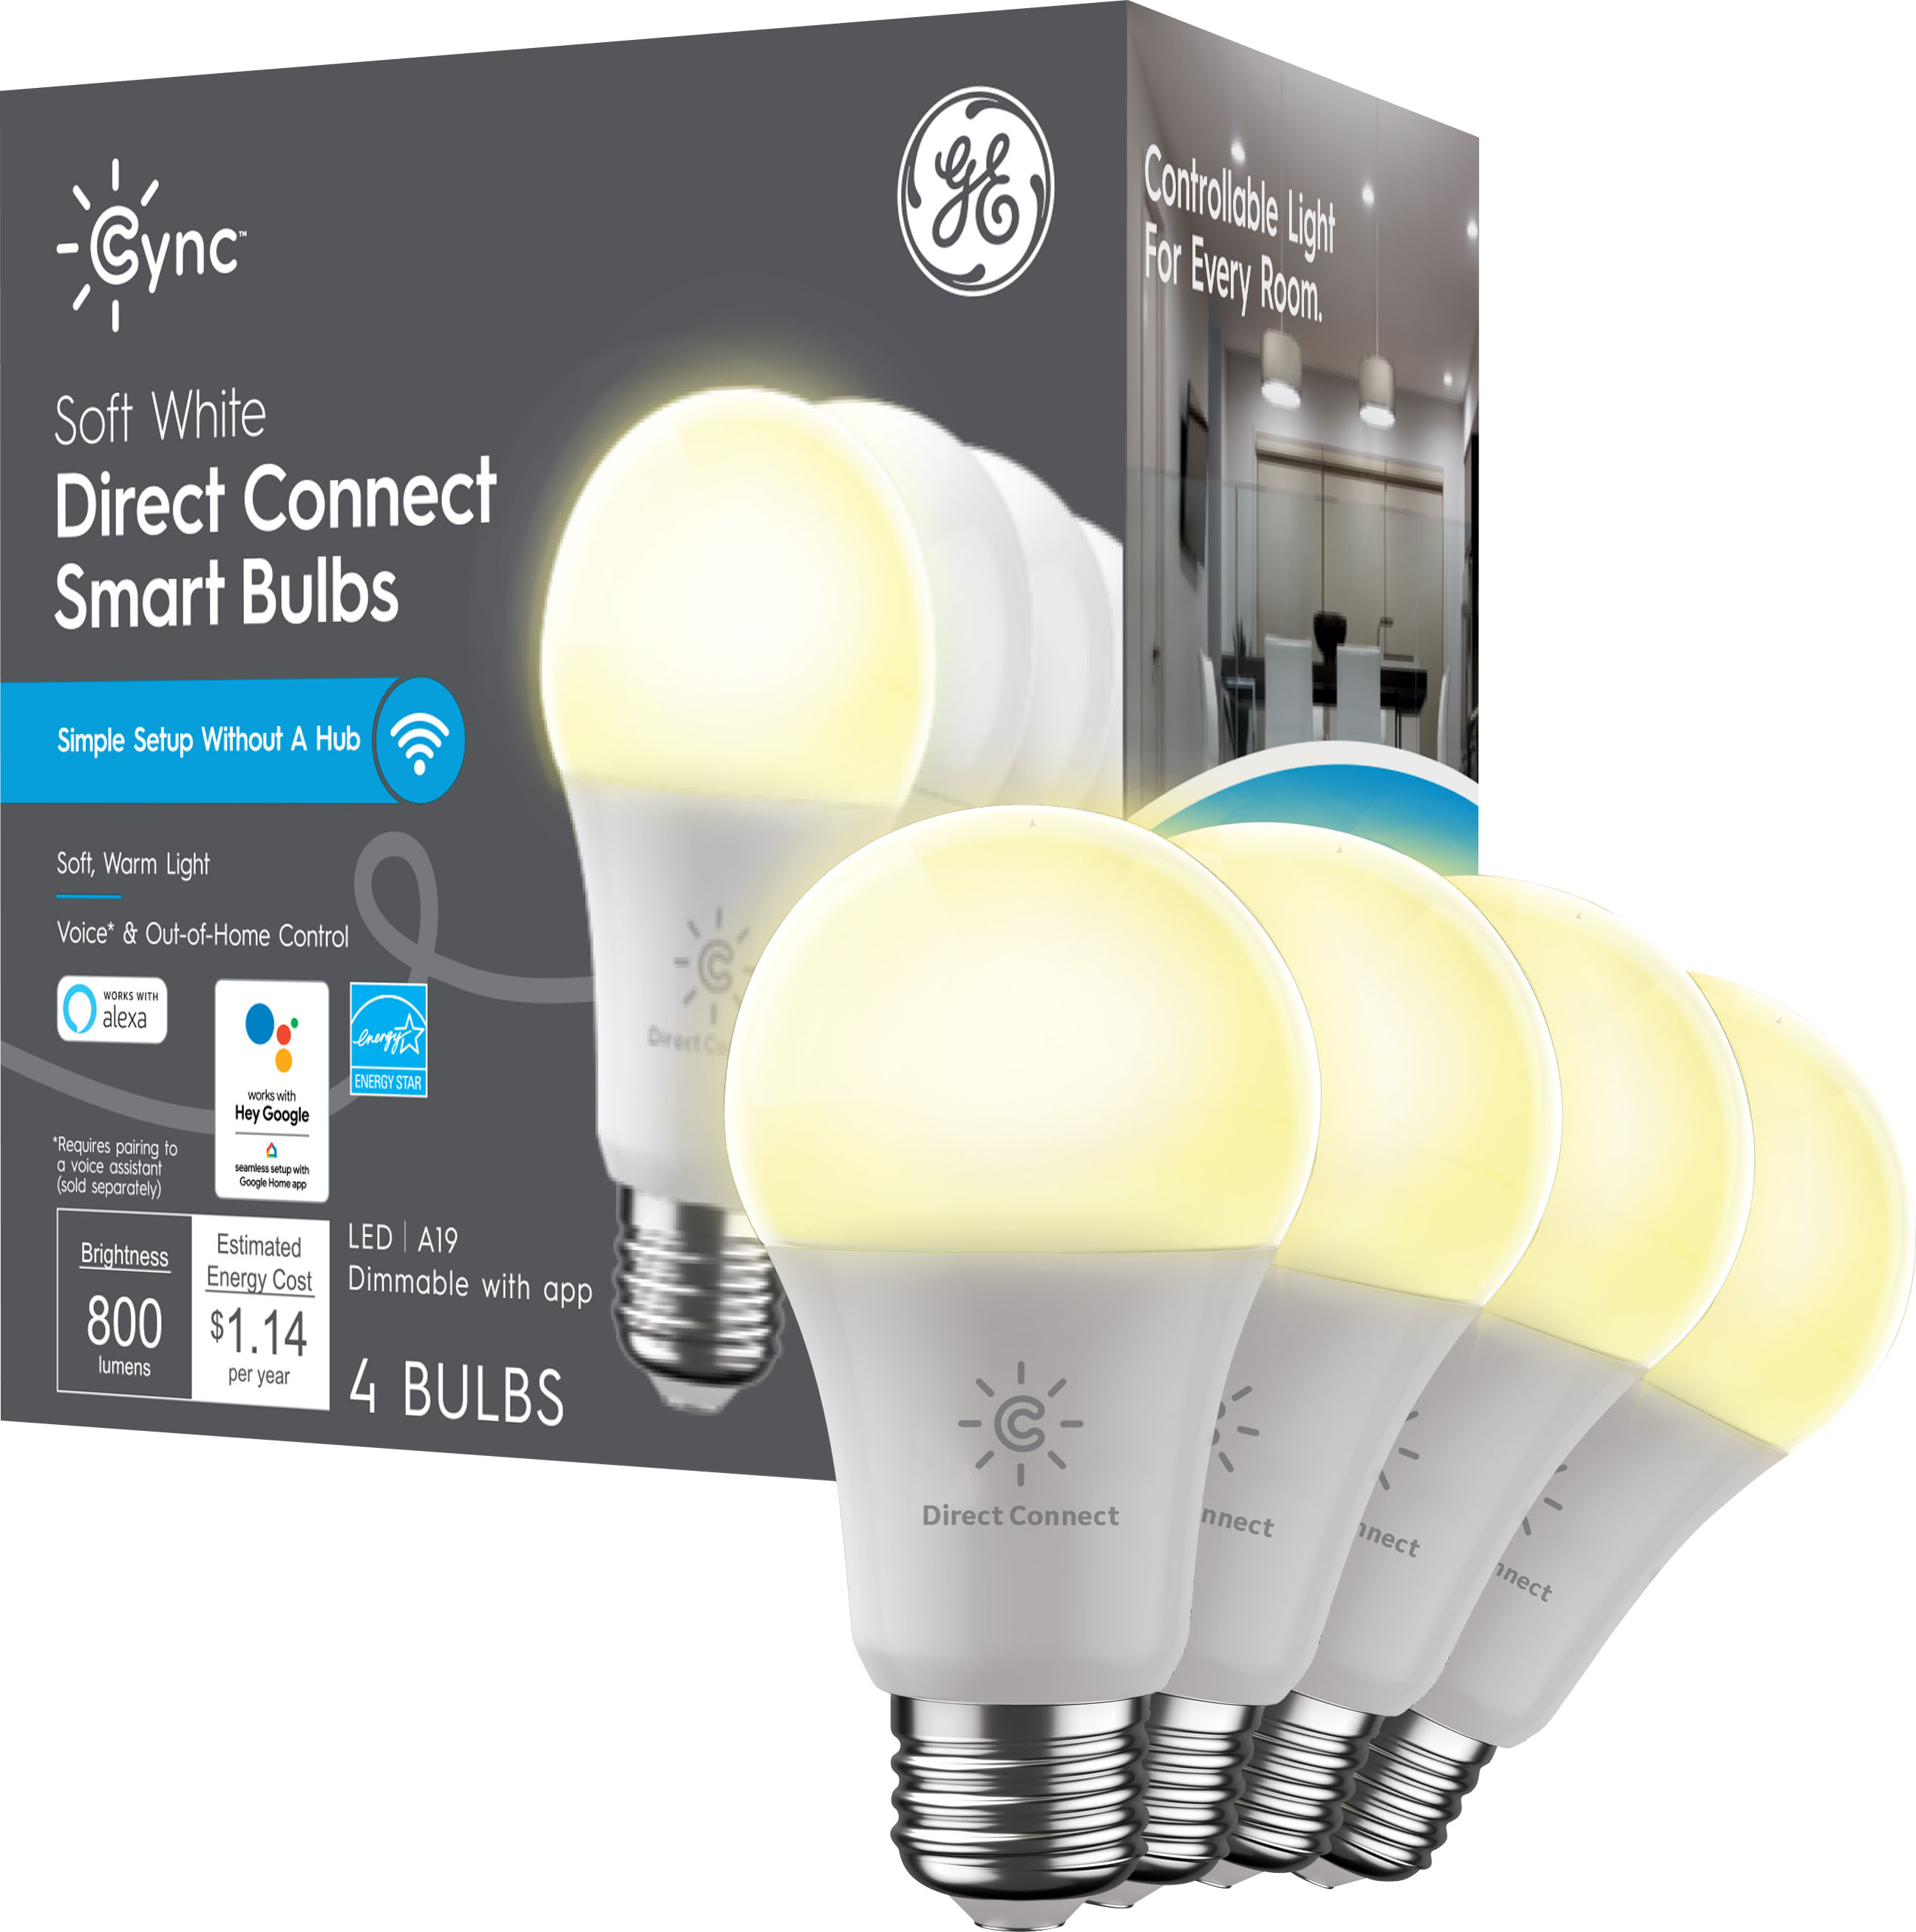 Cync by GE 93128965 Soft White Direct Connect Smart Bulbs (4 LED A19 Light Bulbs)